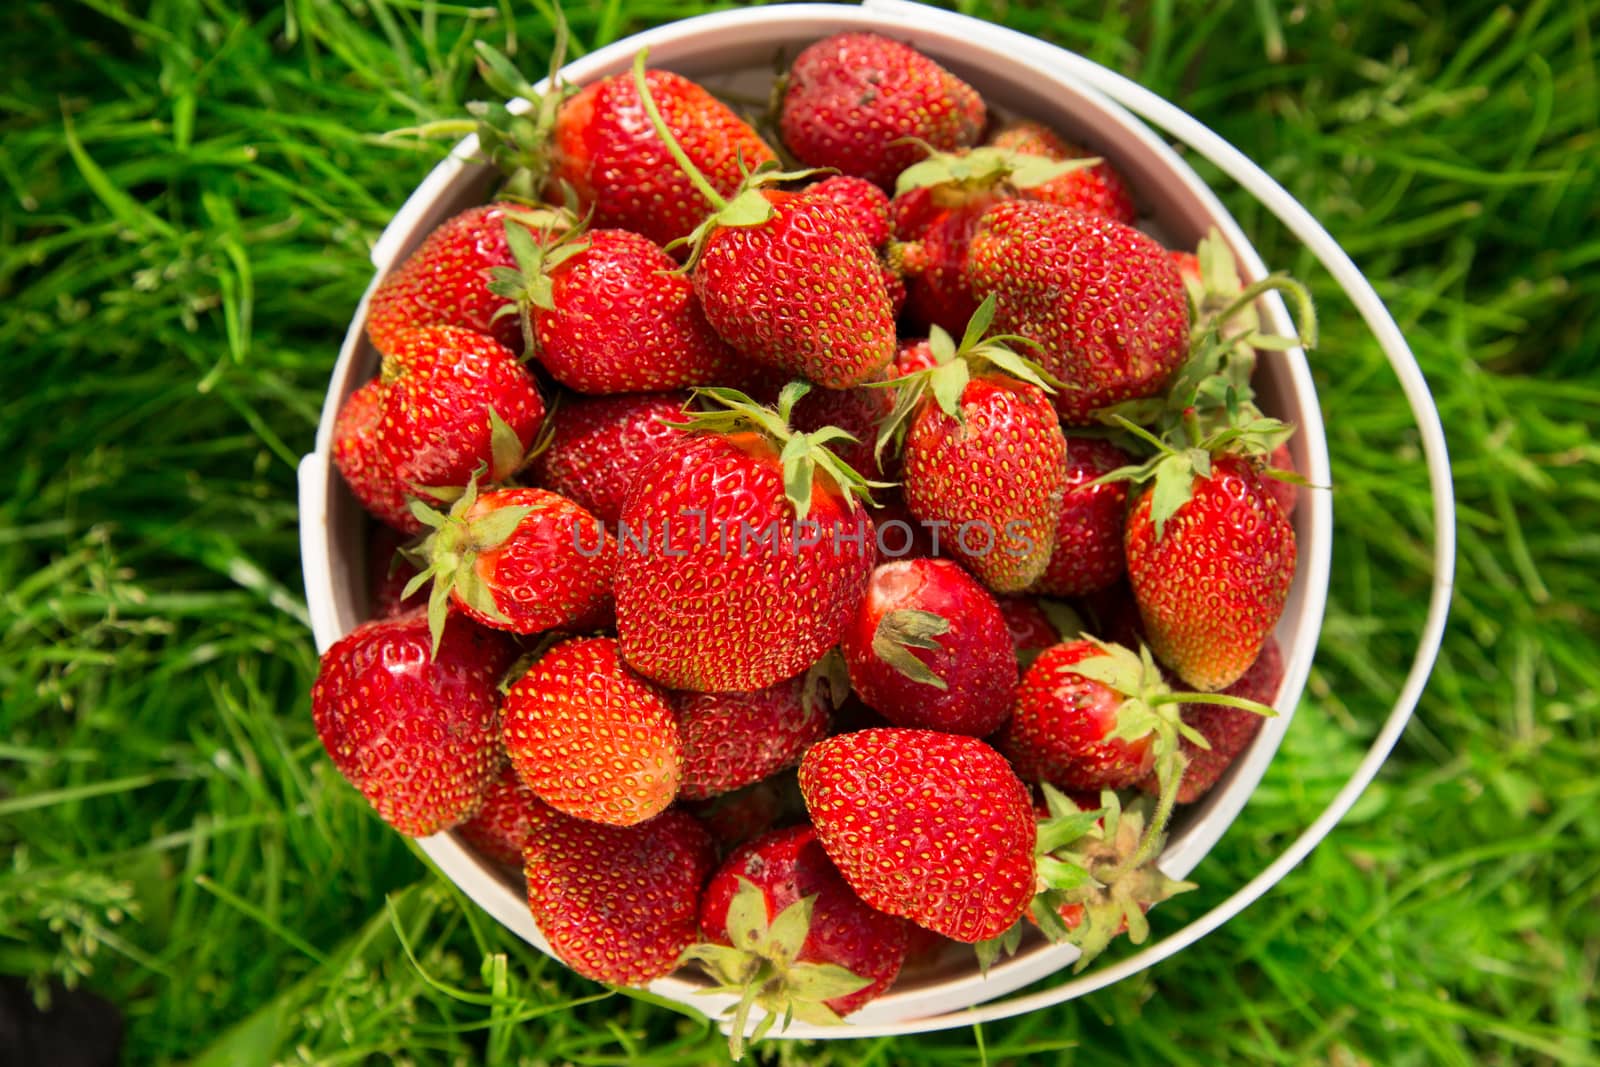 Ripe strawberry in bucket on grass